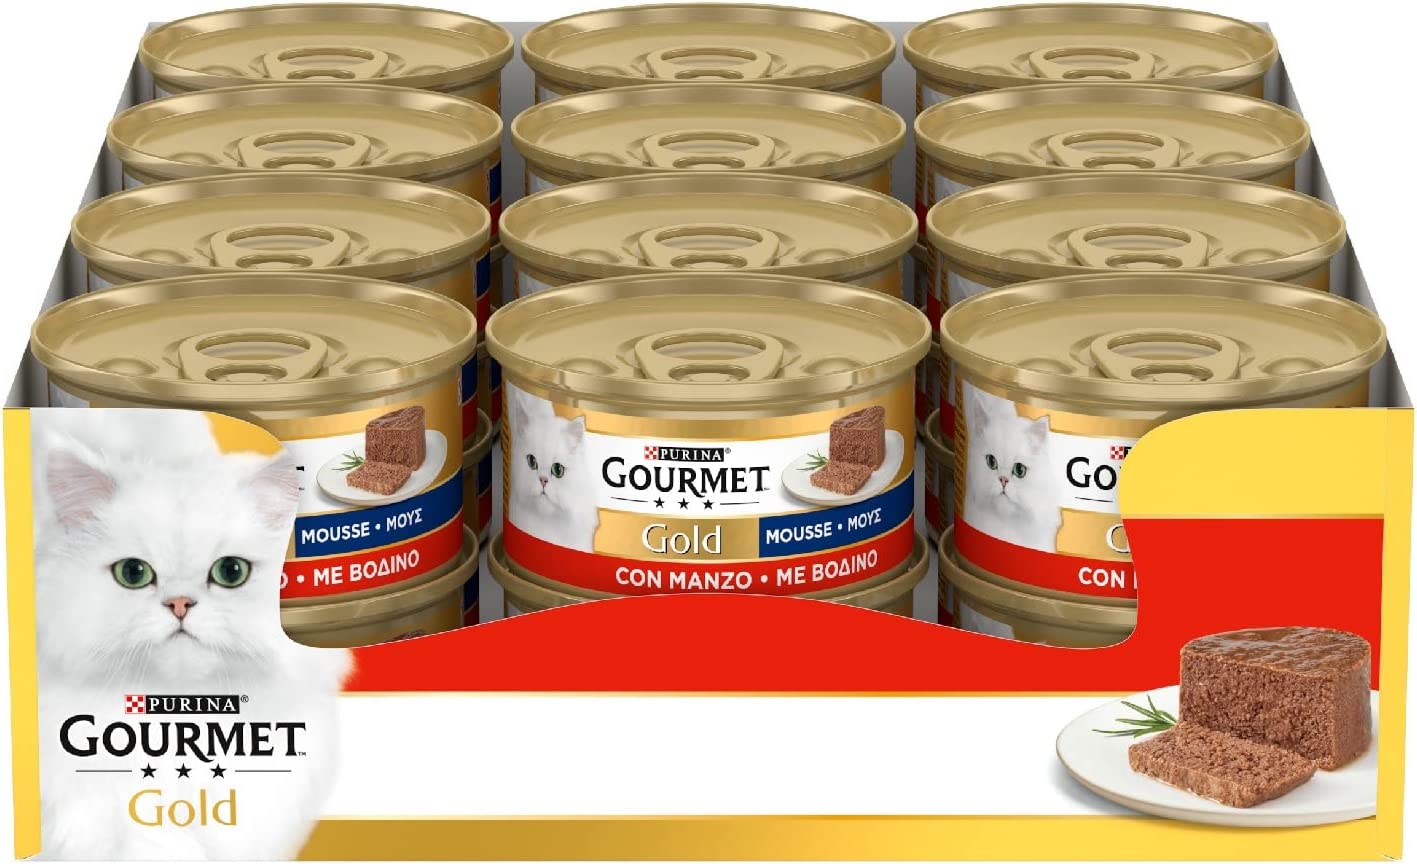 Purina Gourmet Gold Mousse